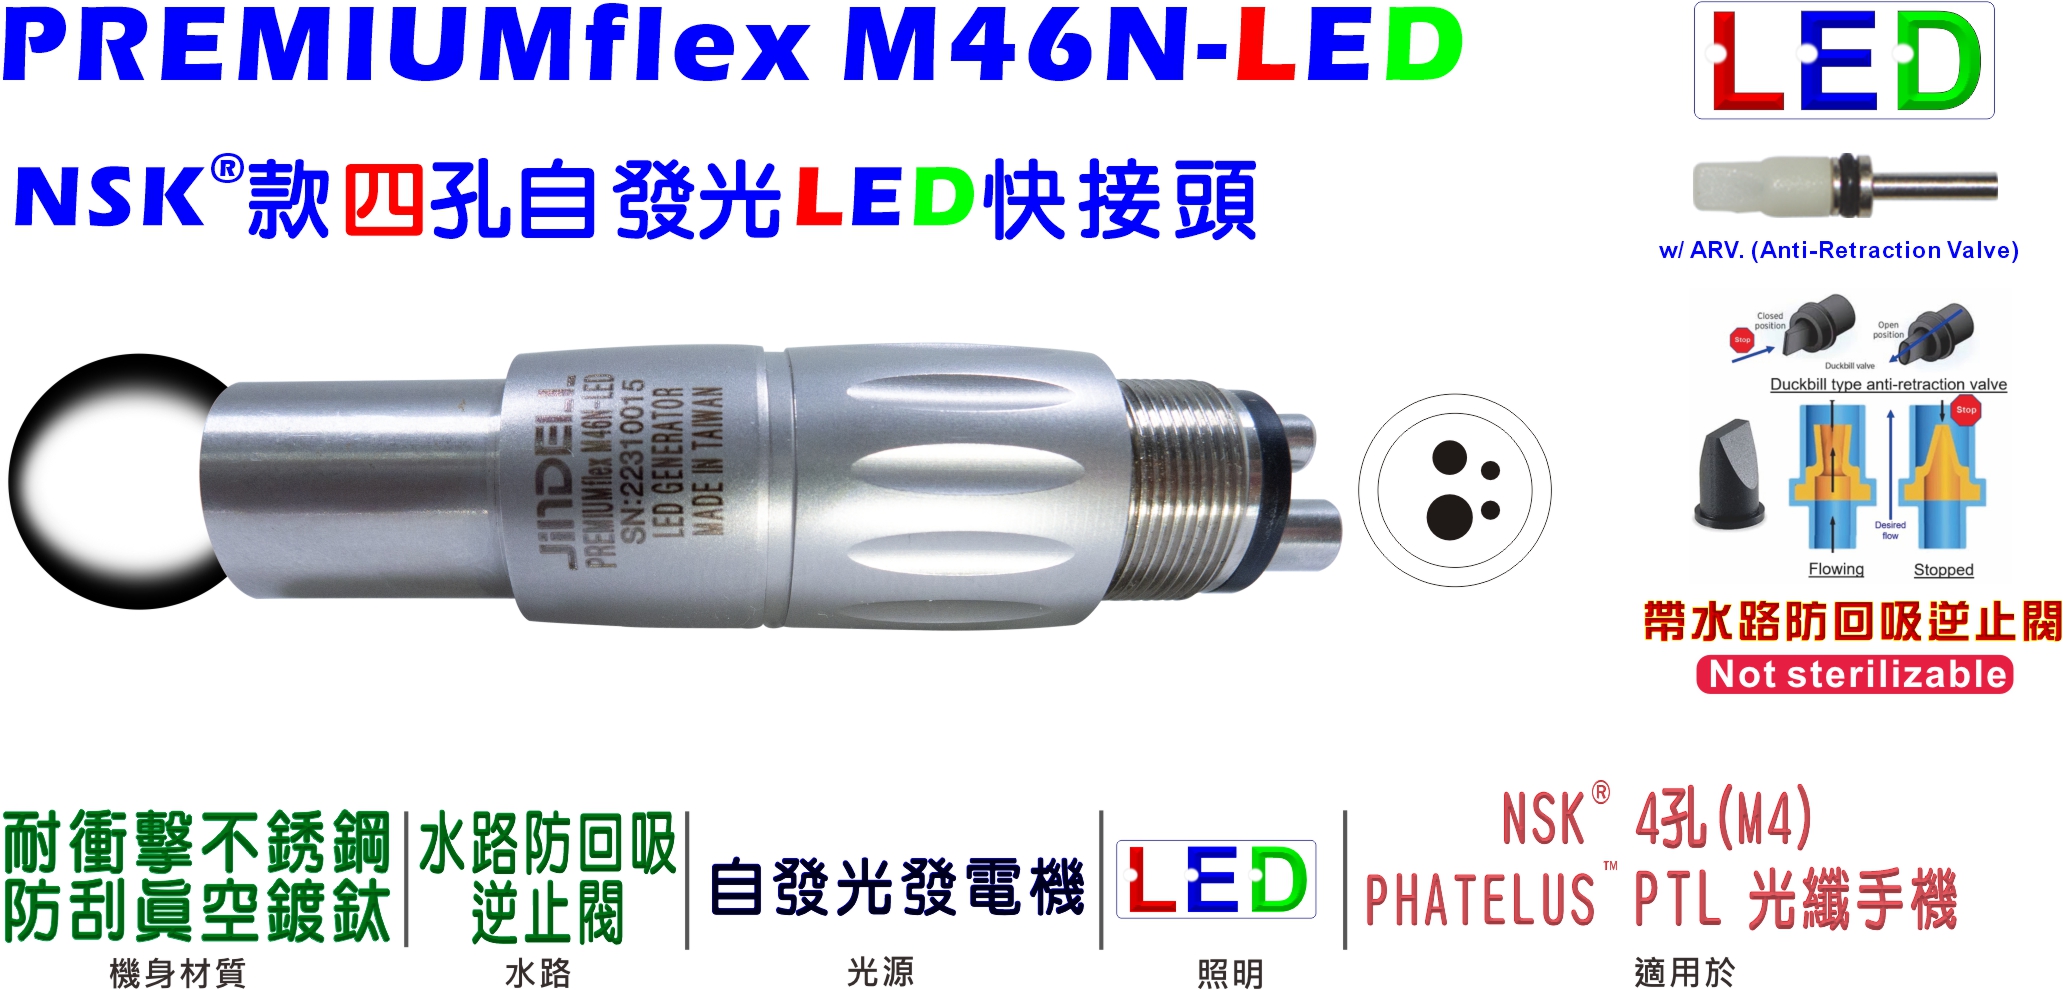 PREMIUMflex M46N-LED coupling